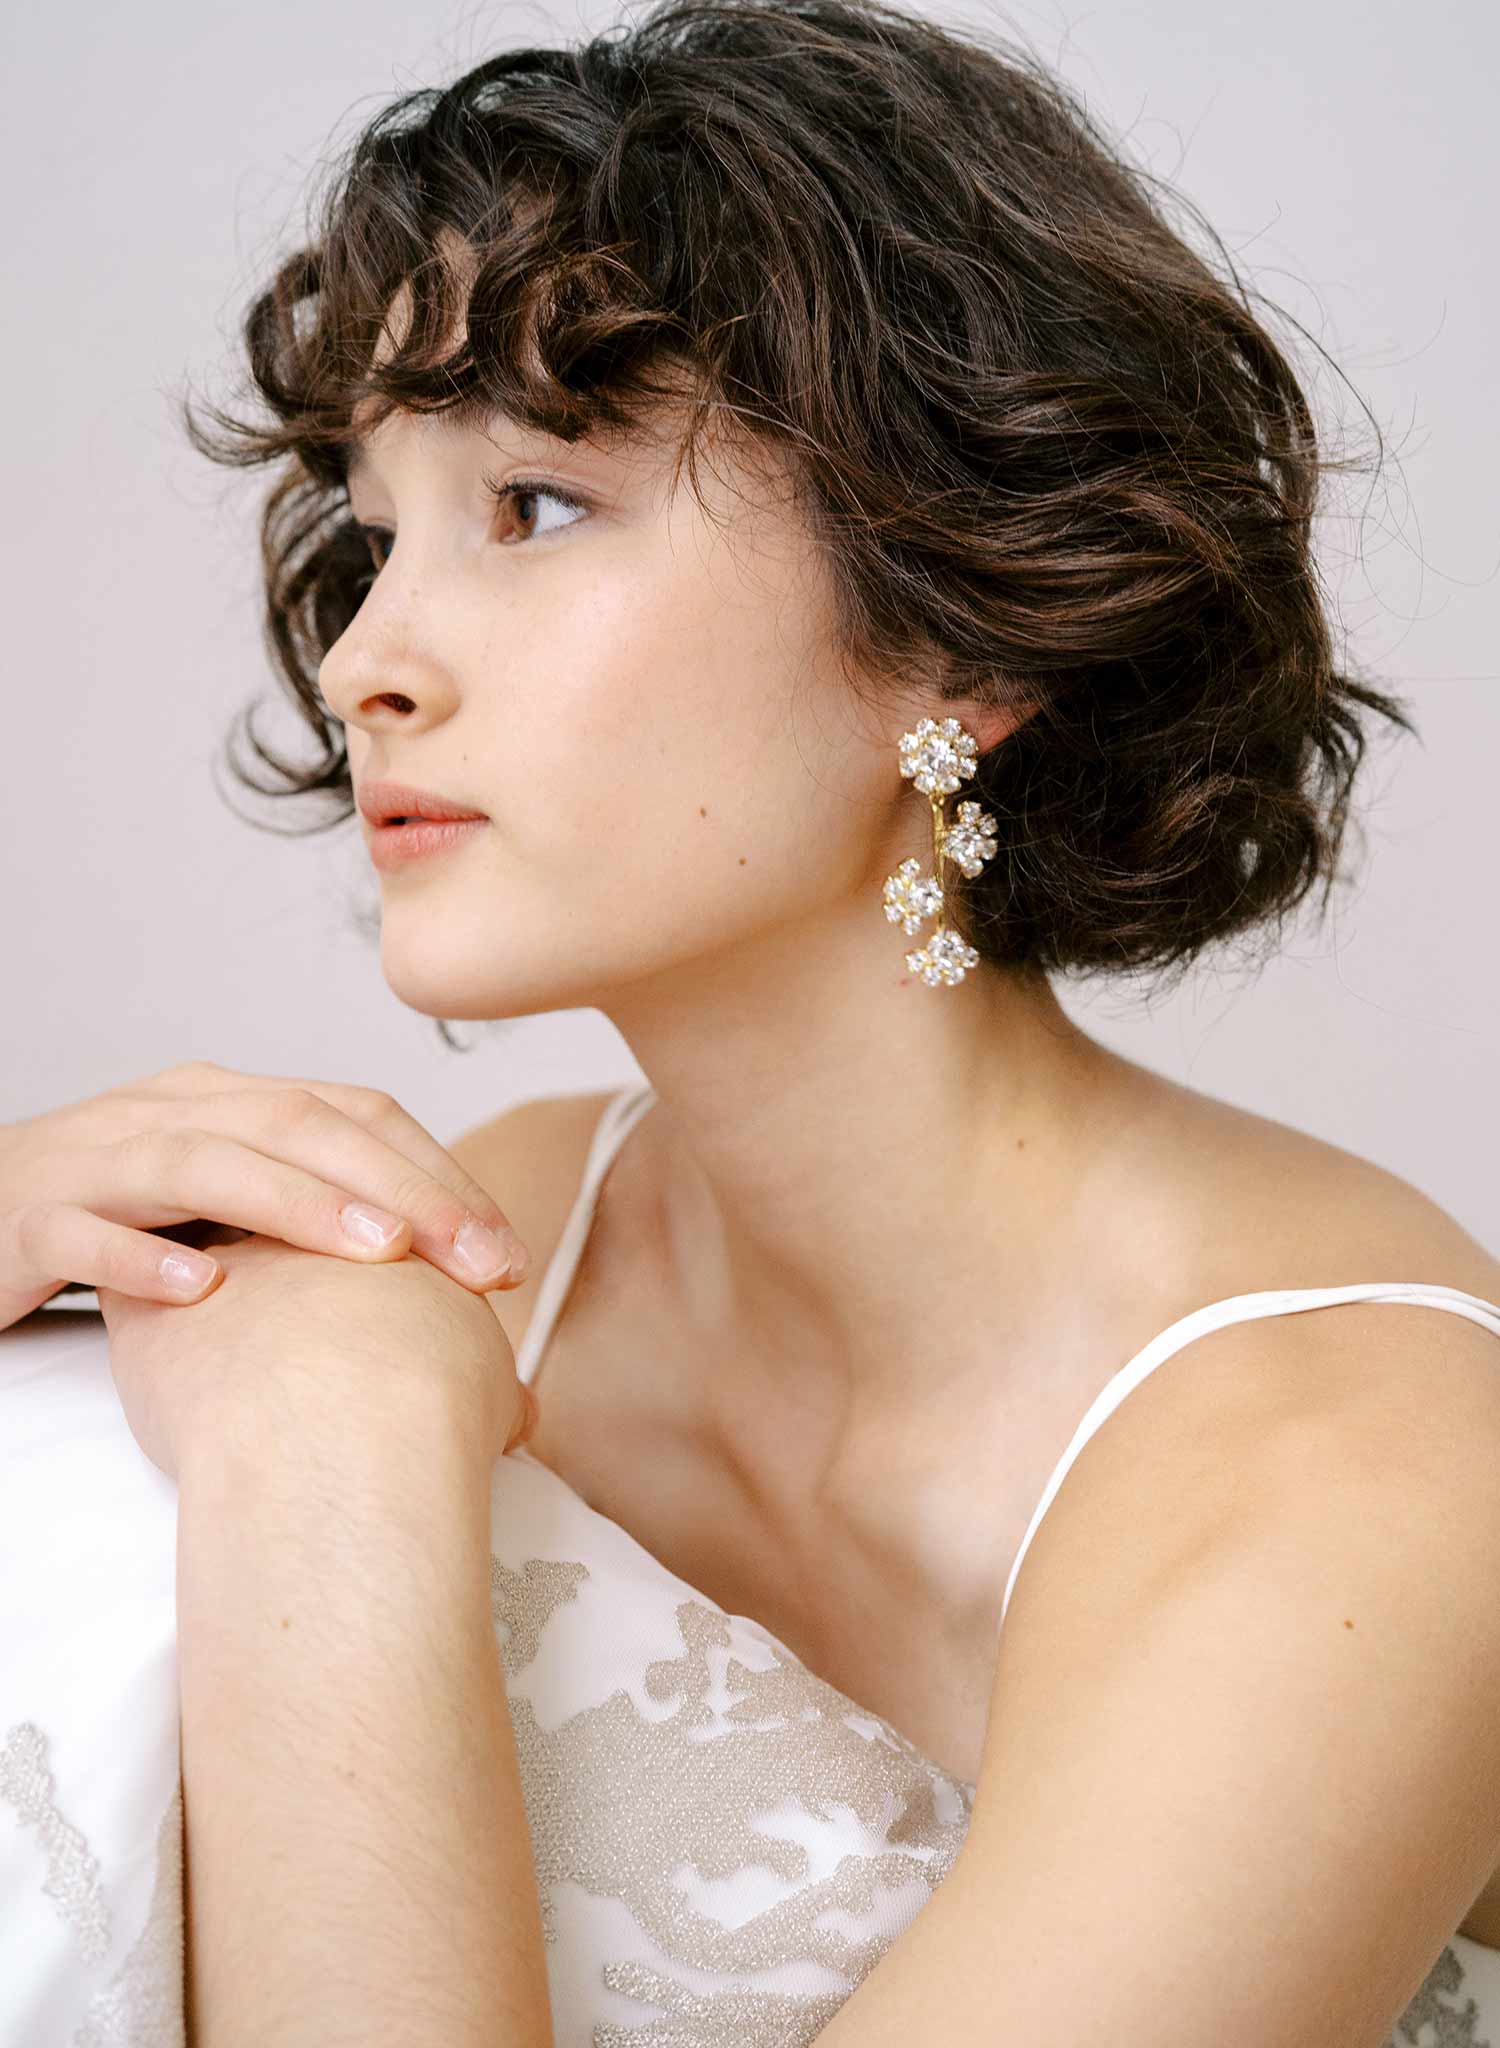 Bridal Crystal Blossom Chandelier Earrings - Dangling Crystal Blossom Earrings - Style #2381